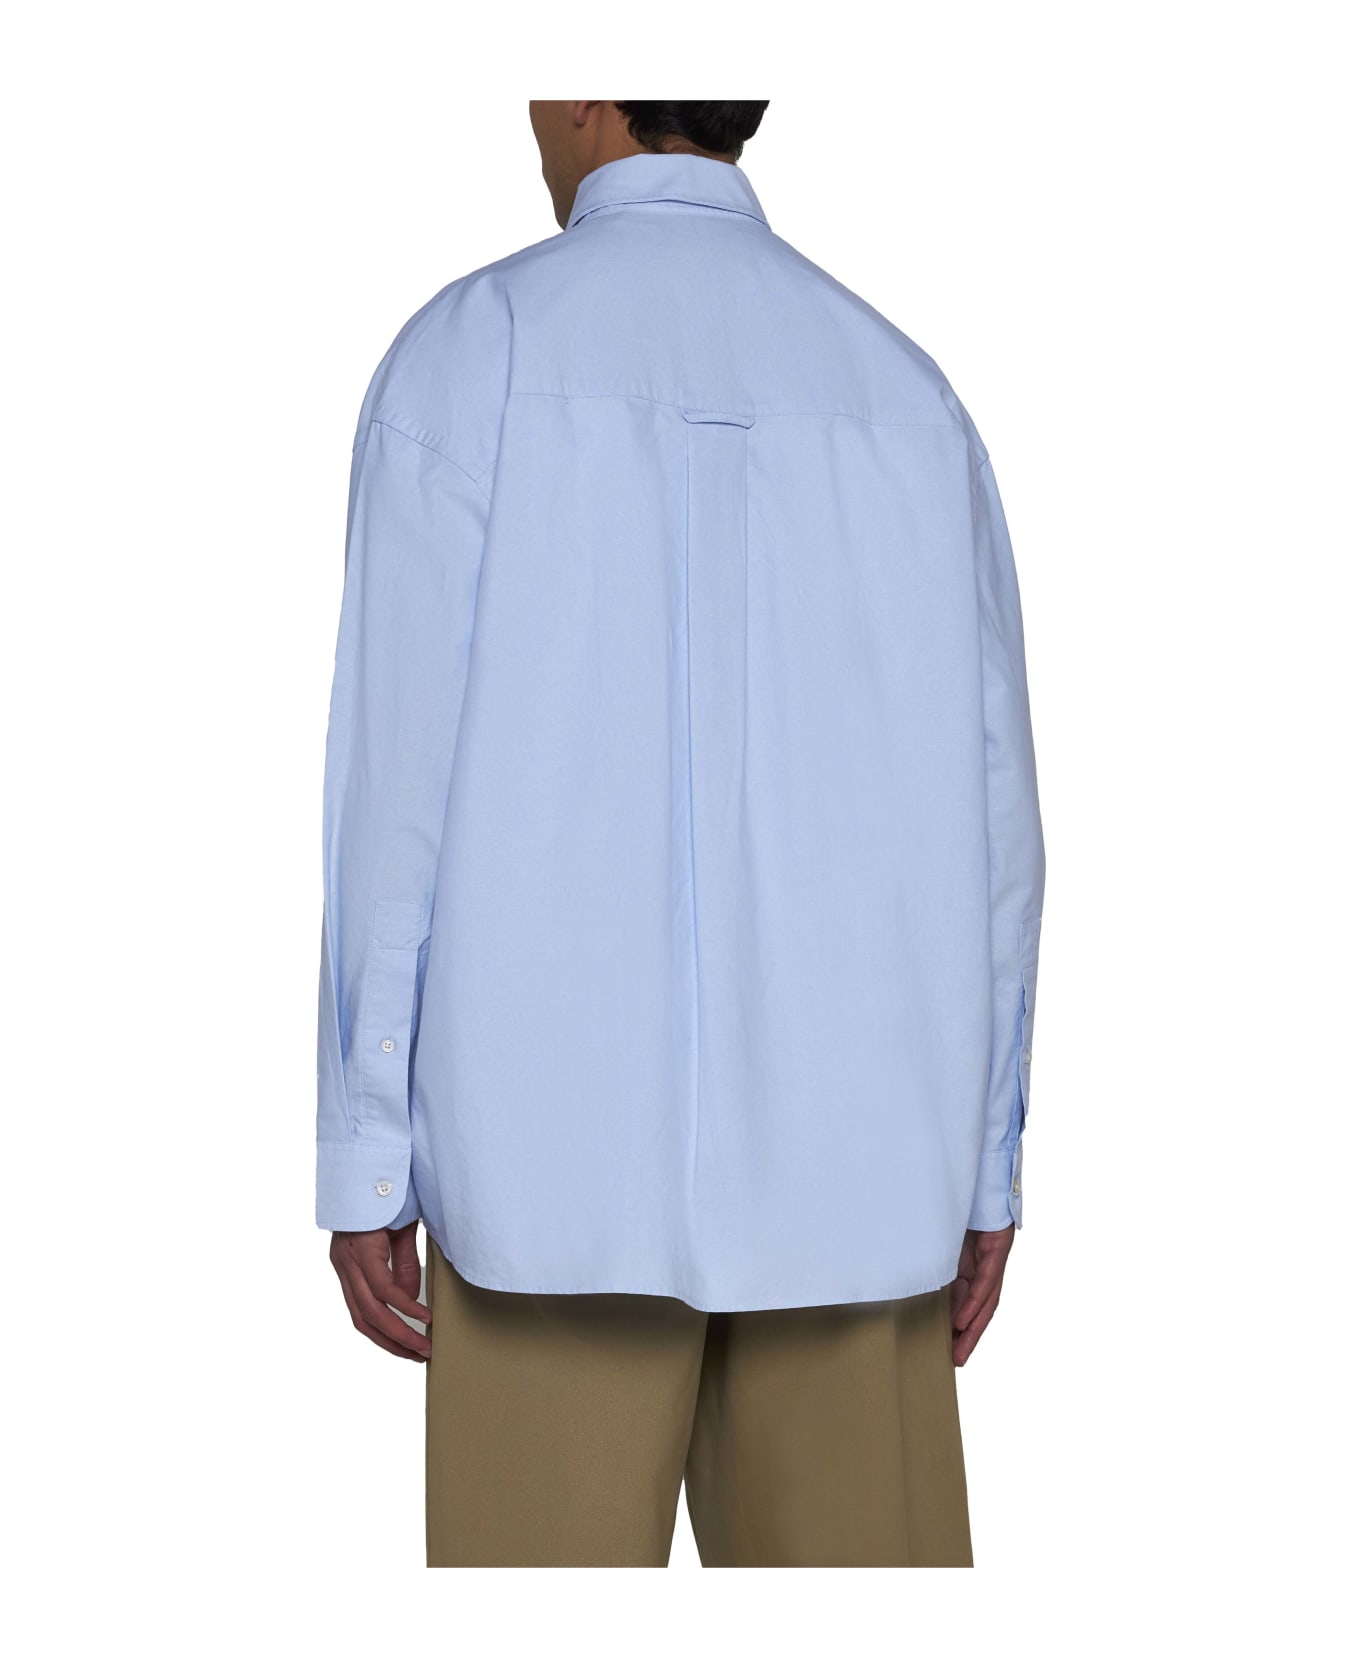 Studio Nicholson Shirt - Oxford blue シャツ